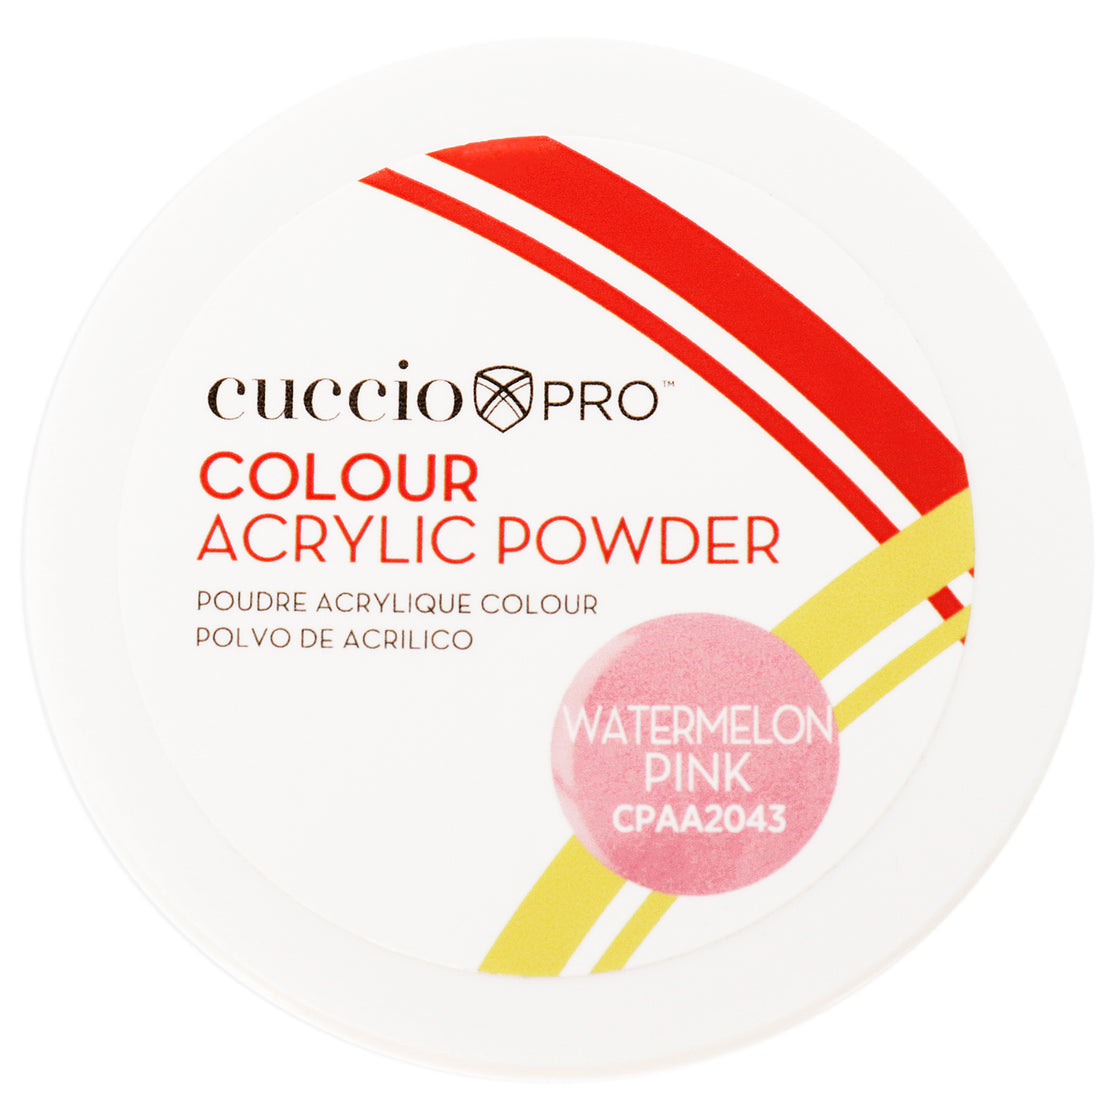 Colour Acrylic Powder - Watermelon Pink by Cuccio Pro for Women - 1.6 oz Acrylic Powder